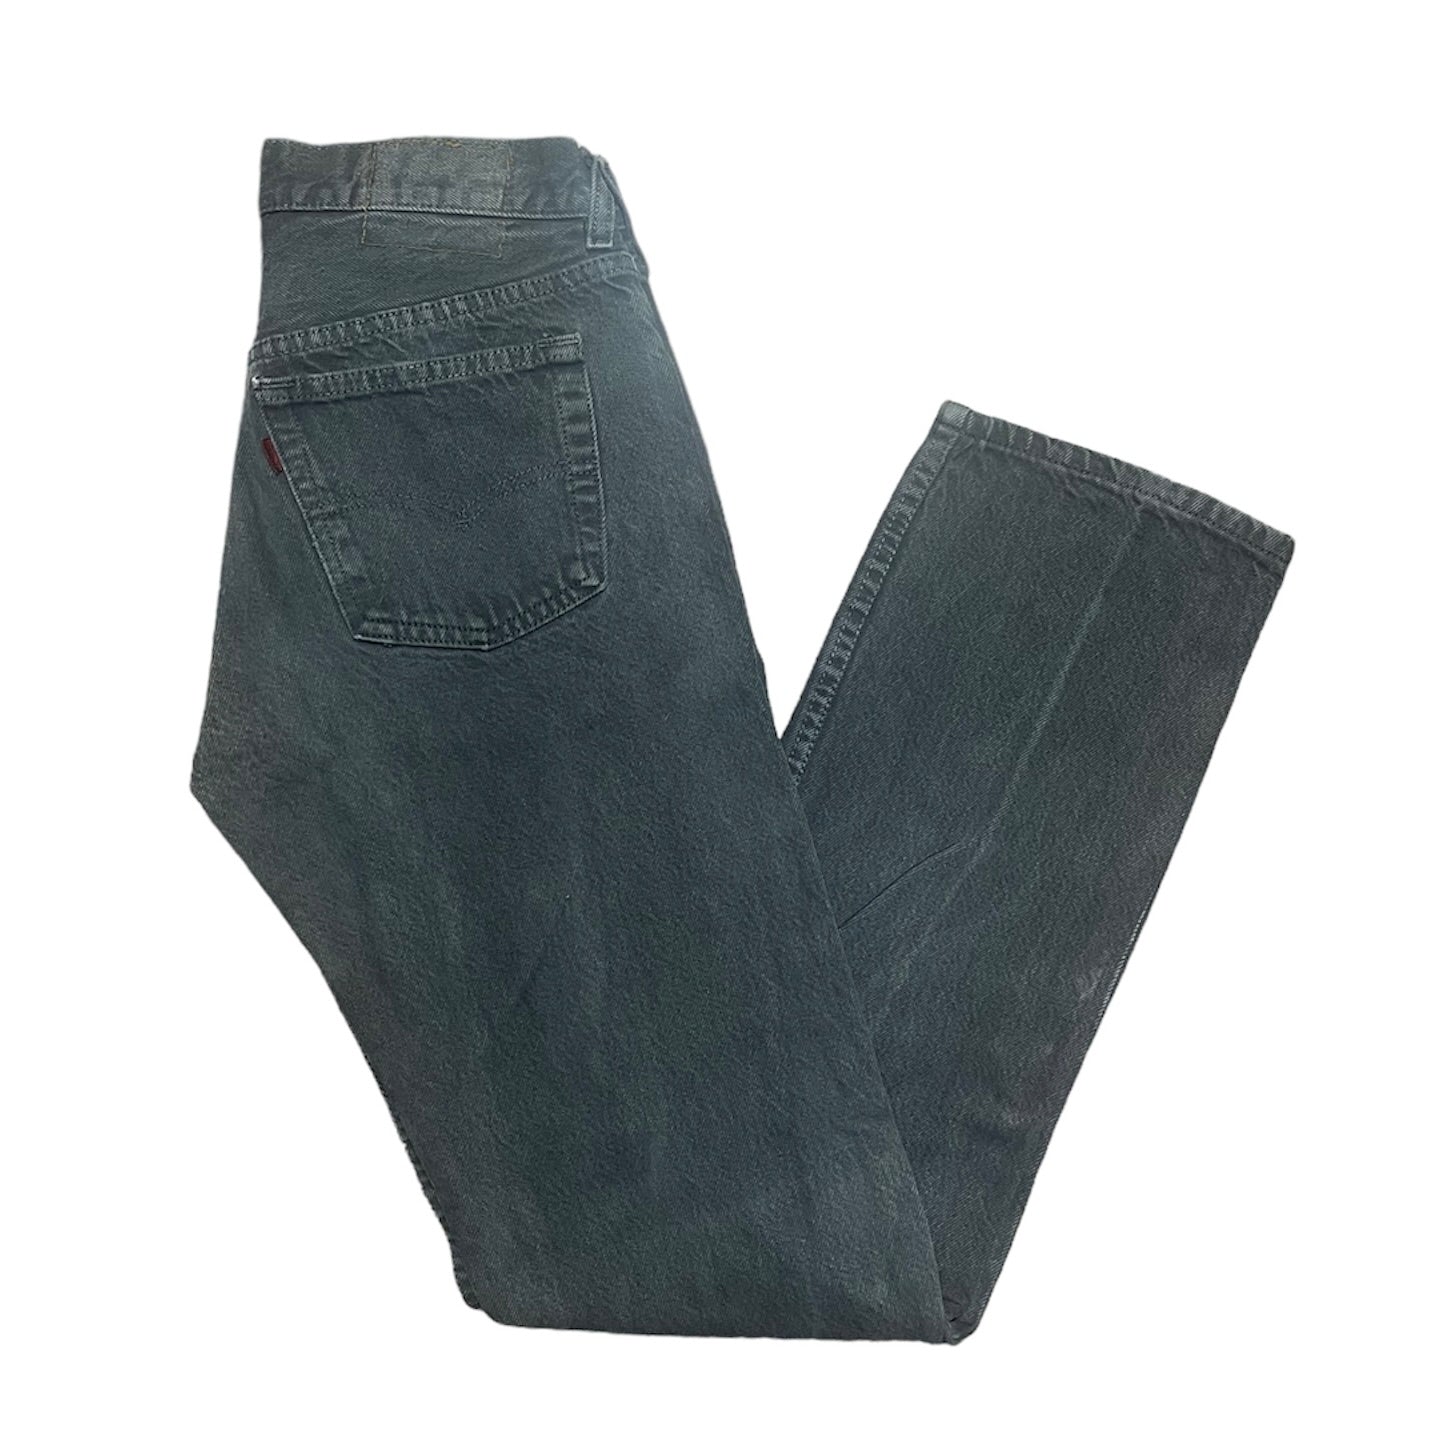 Vintage Levis Black/Grey Jeans